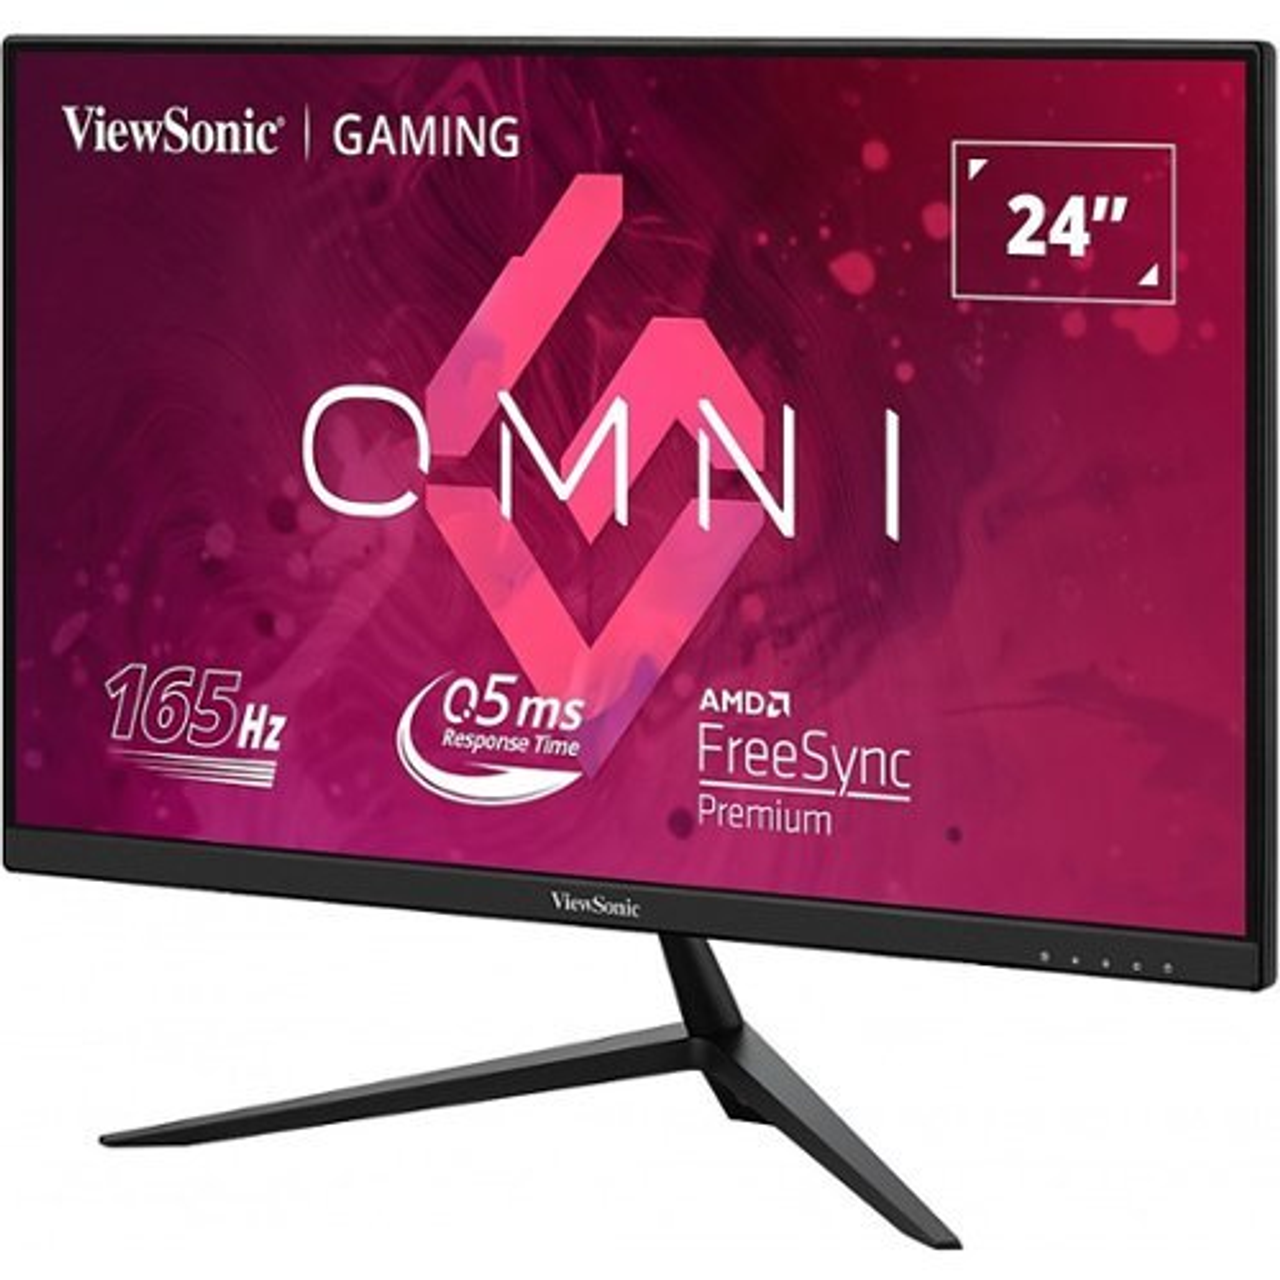 ViewSonic - 24" OMNI 1080p 165Hz Gaming Monitor With AMD FreeSync Premium - Black